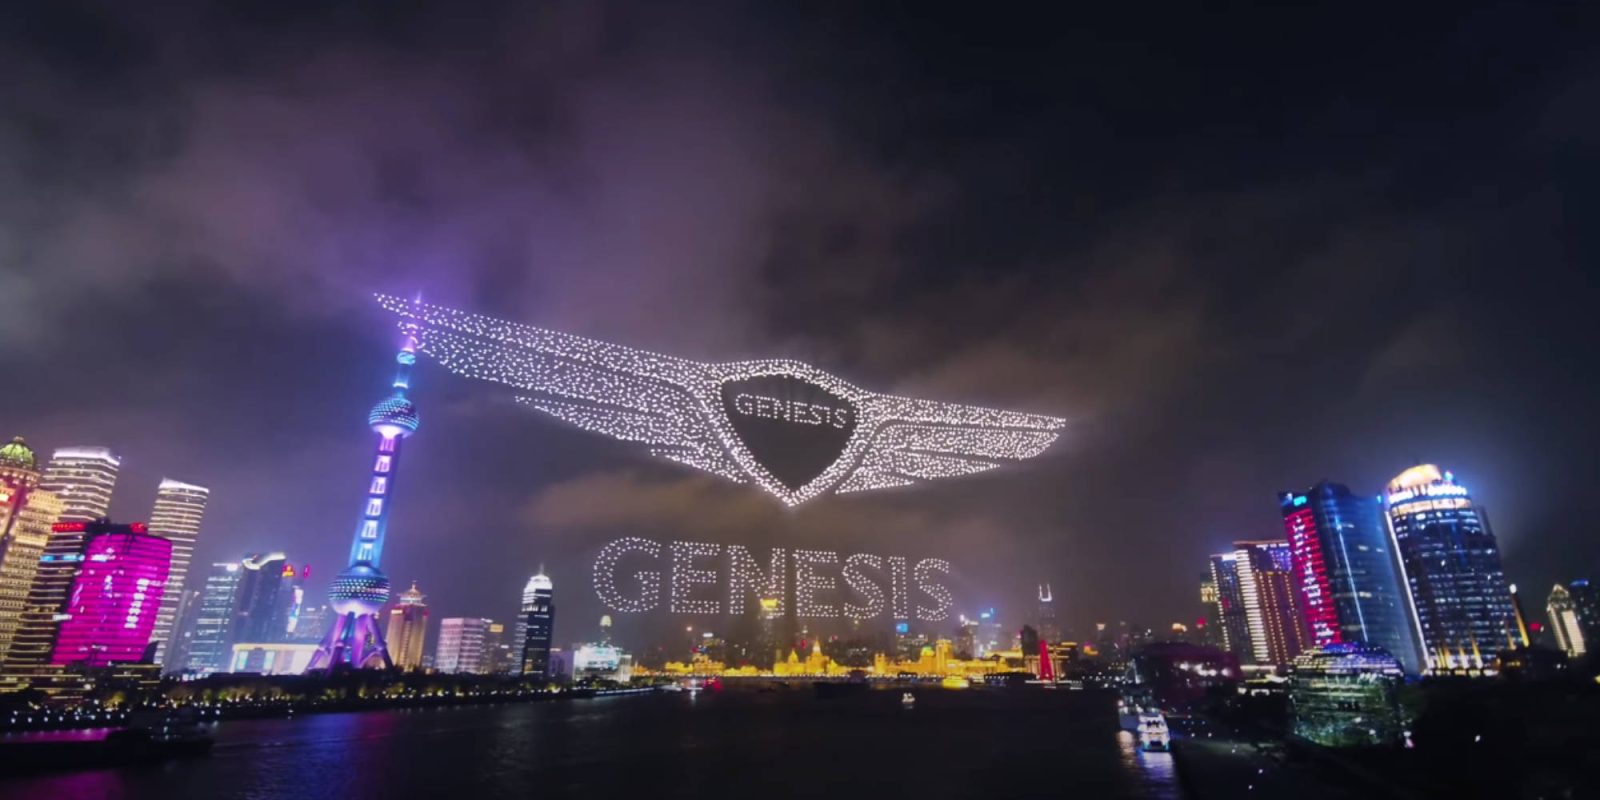 Genesis sends up 3,281 drones in recordbreaking drone show